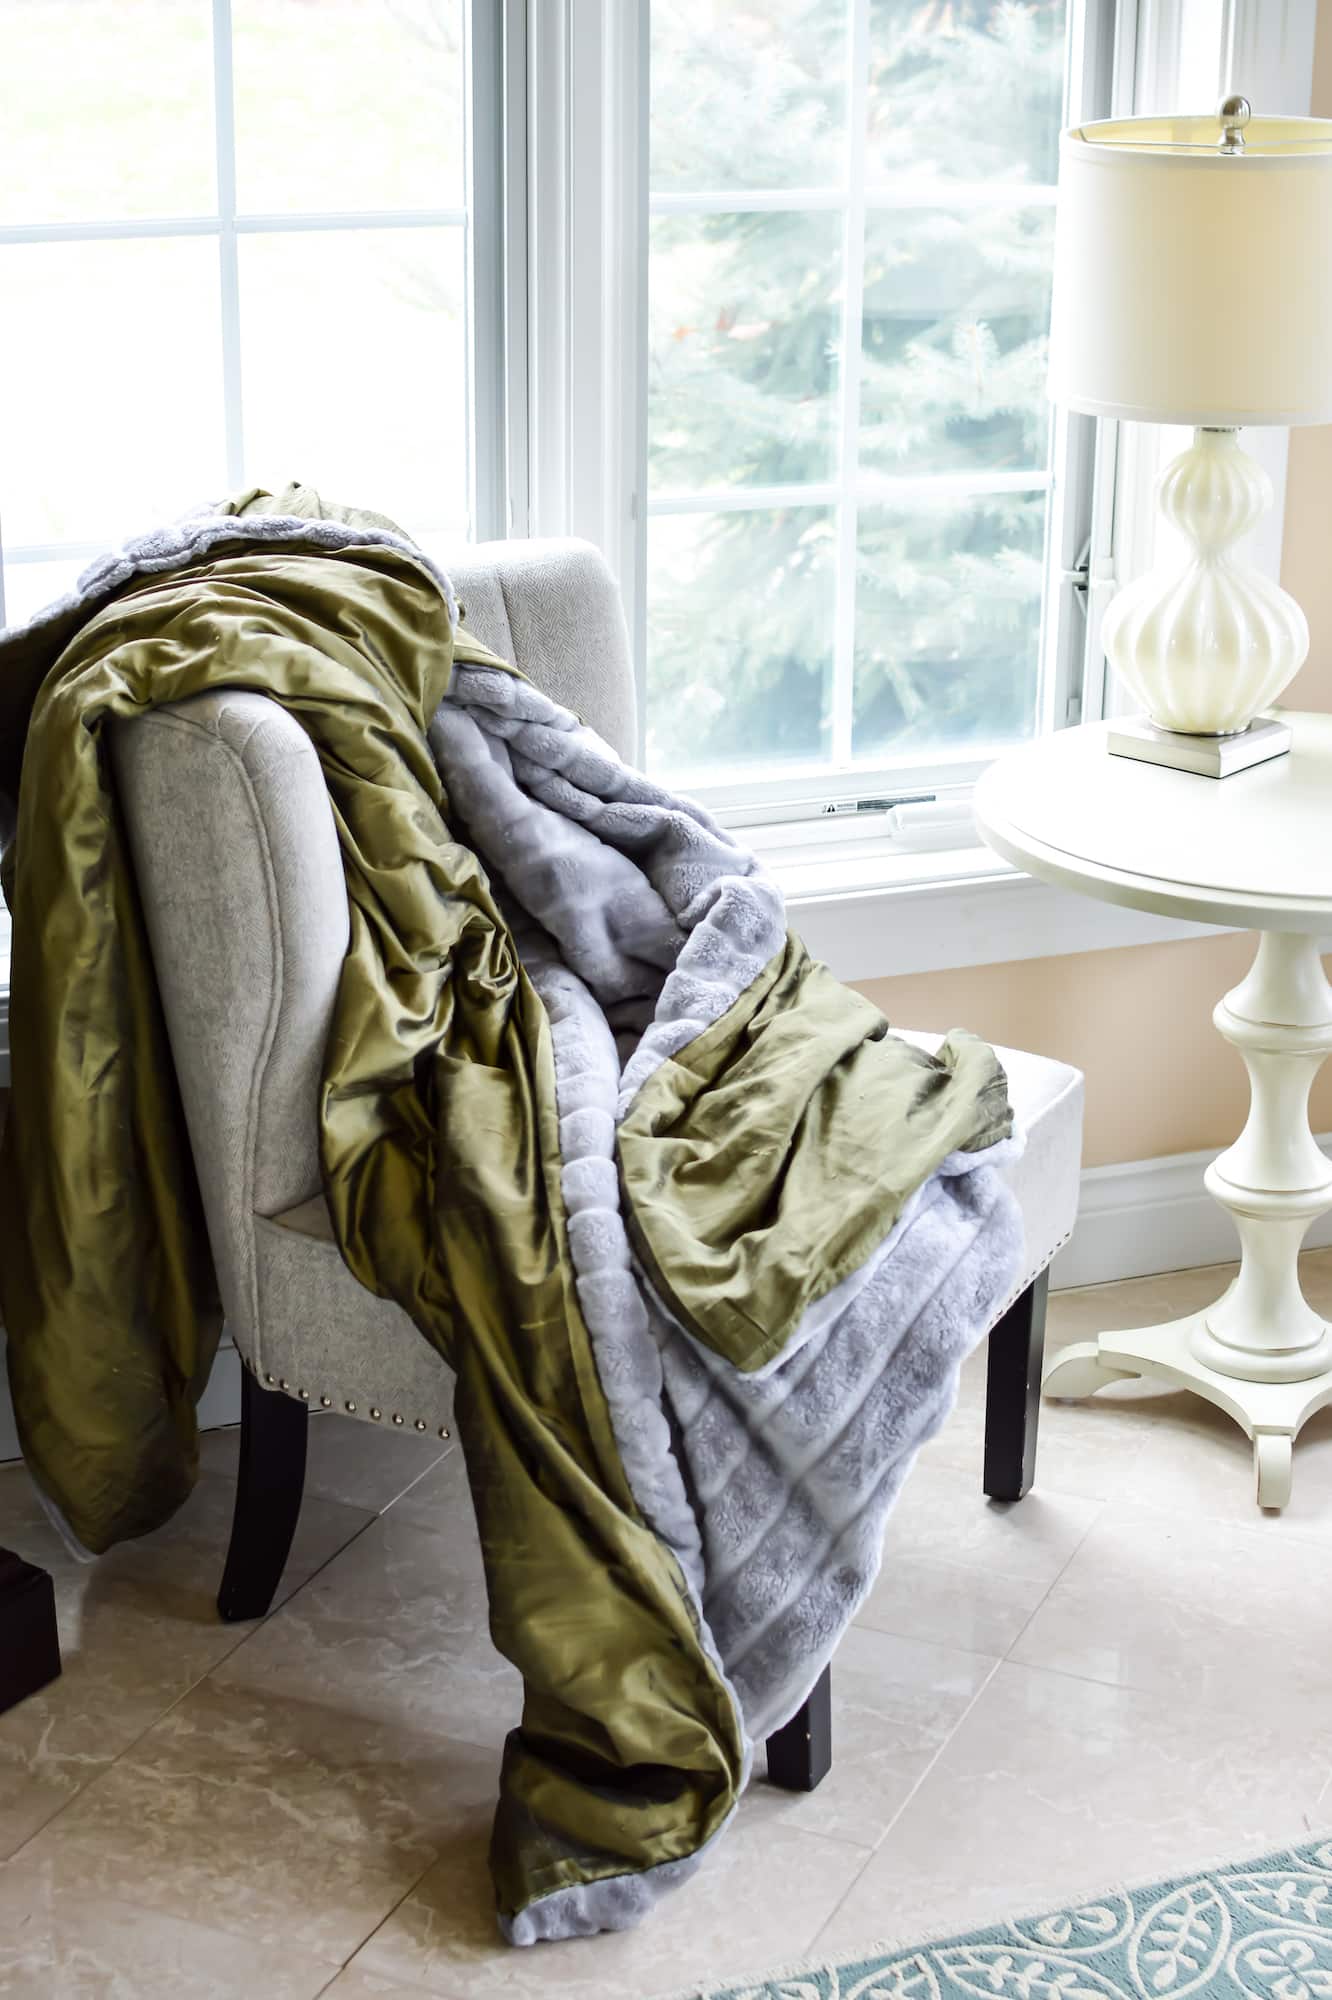 plush double sided blanket draped across back of living room chair